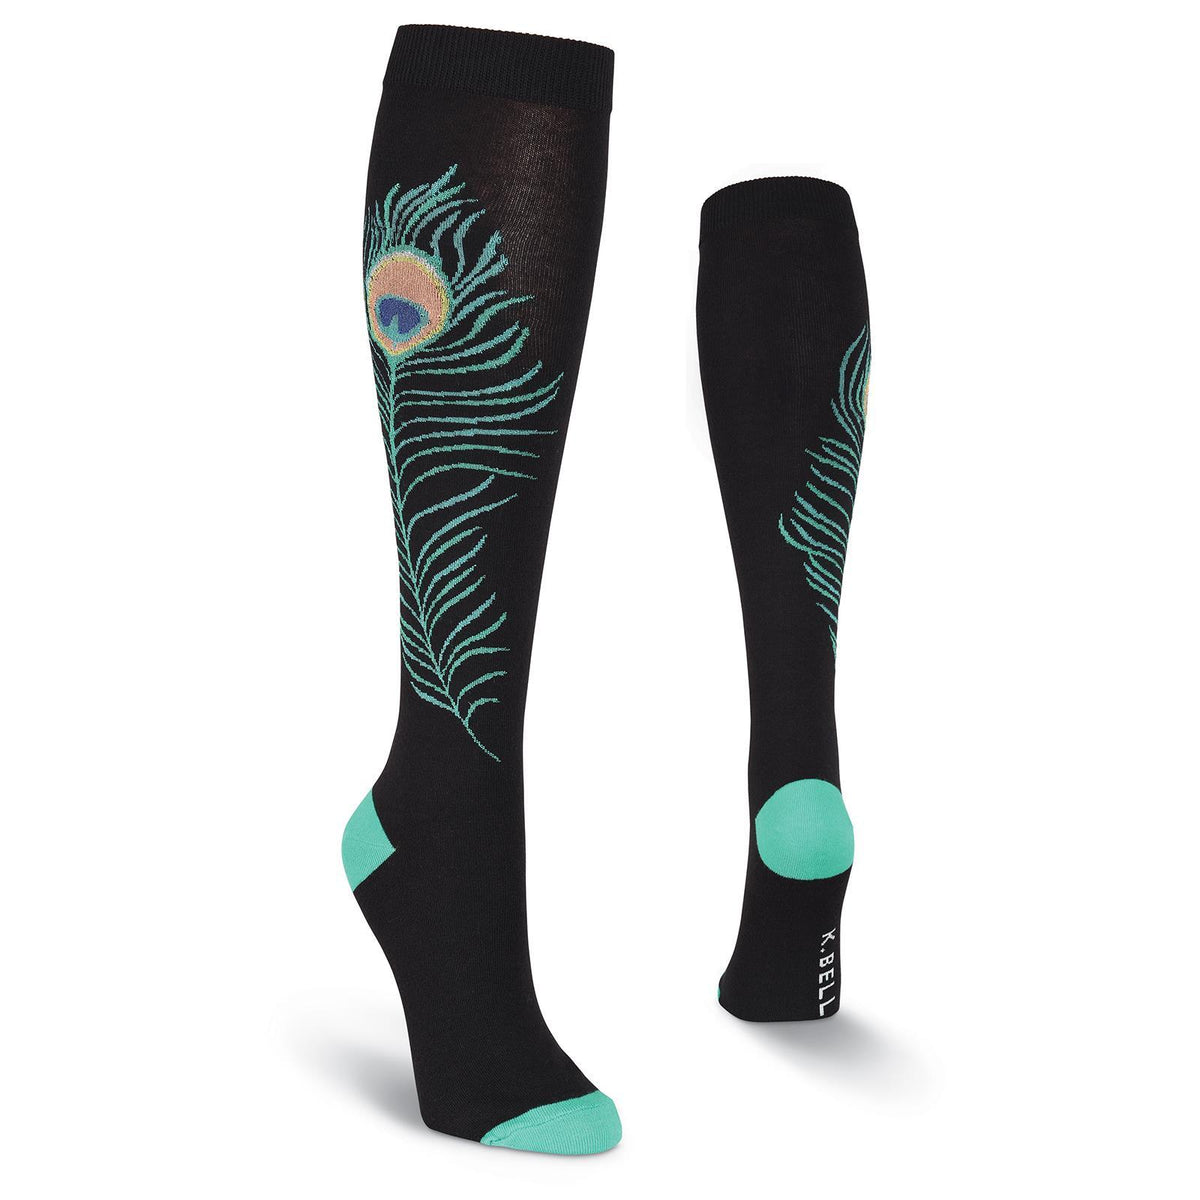 3 Pairs of IRISH DANCE Socks POODLE Design - Choice of sizes